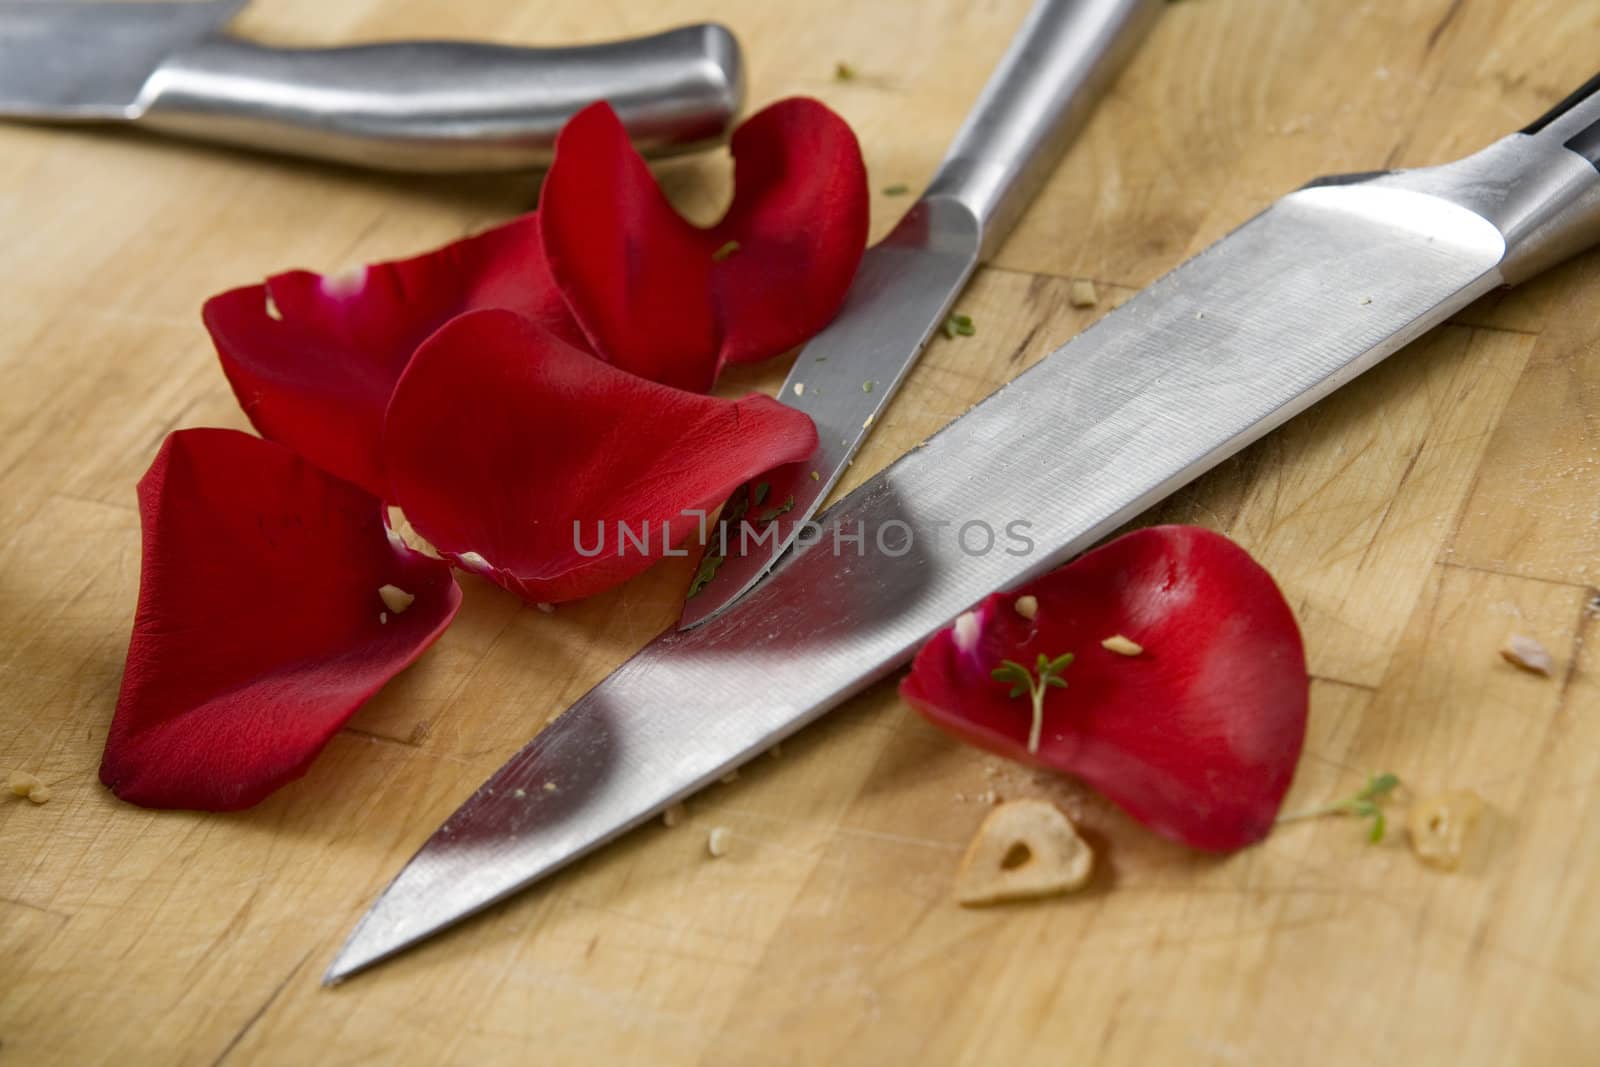 Petal rose and knife